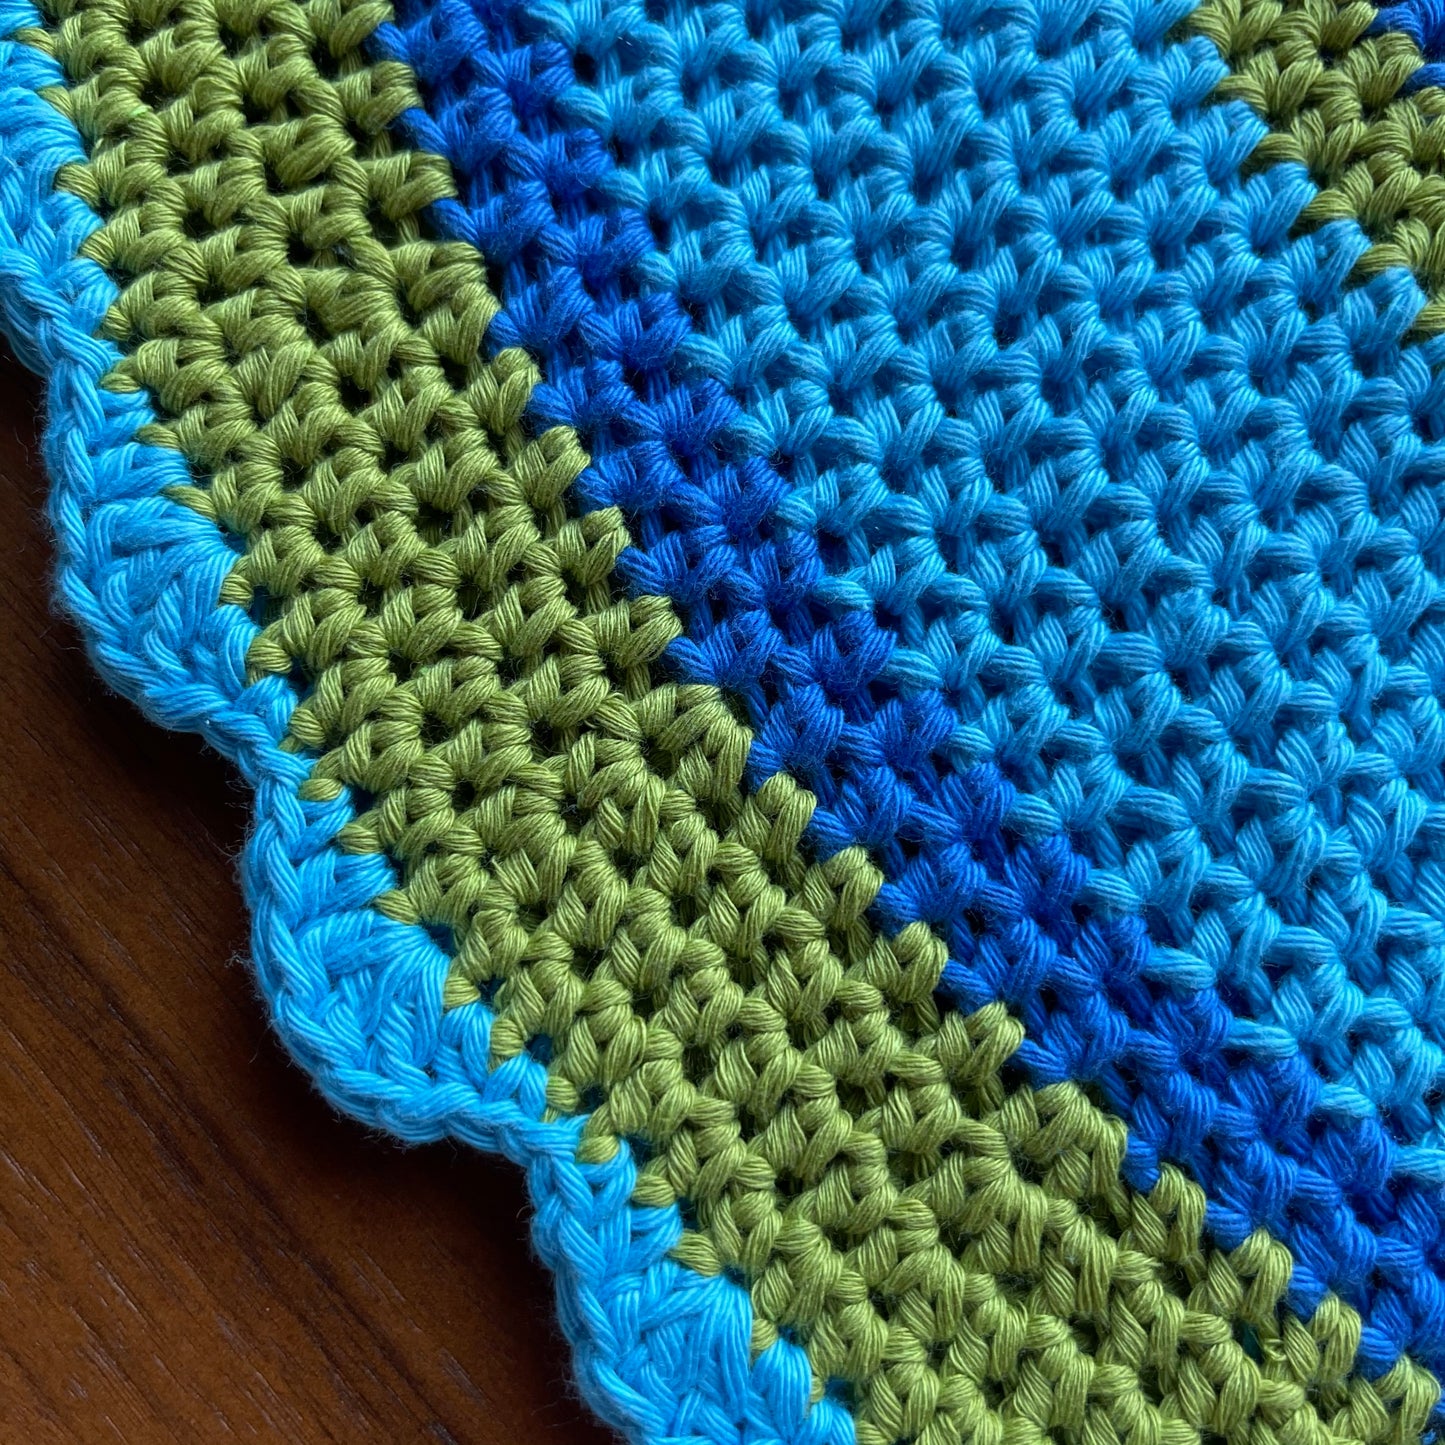 Handmade cotton scallop edge crochet bucket hat in blue and green